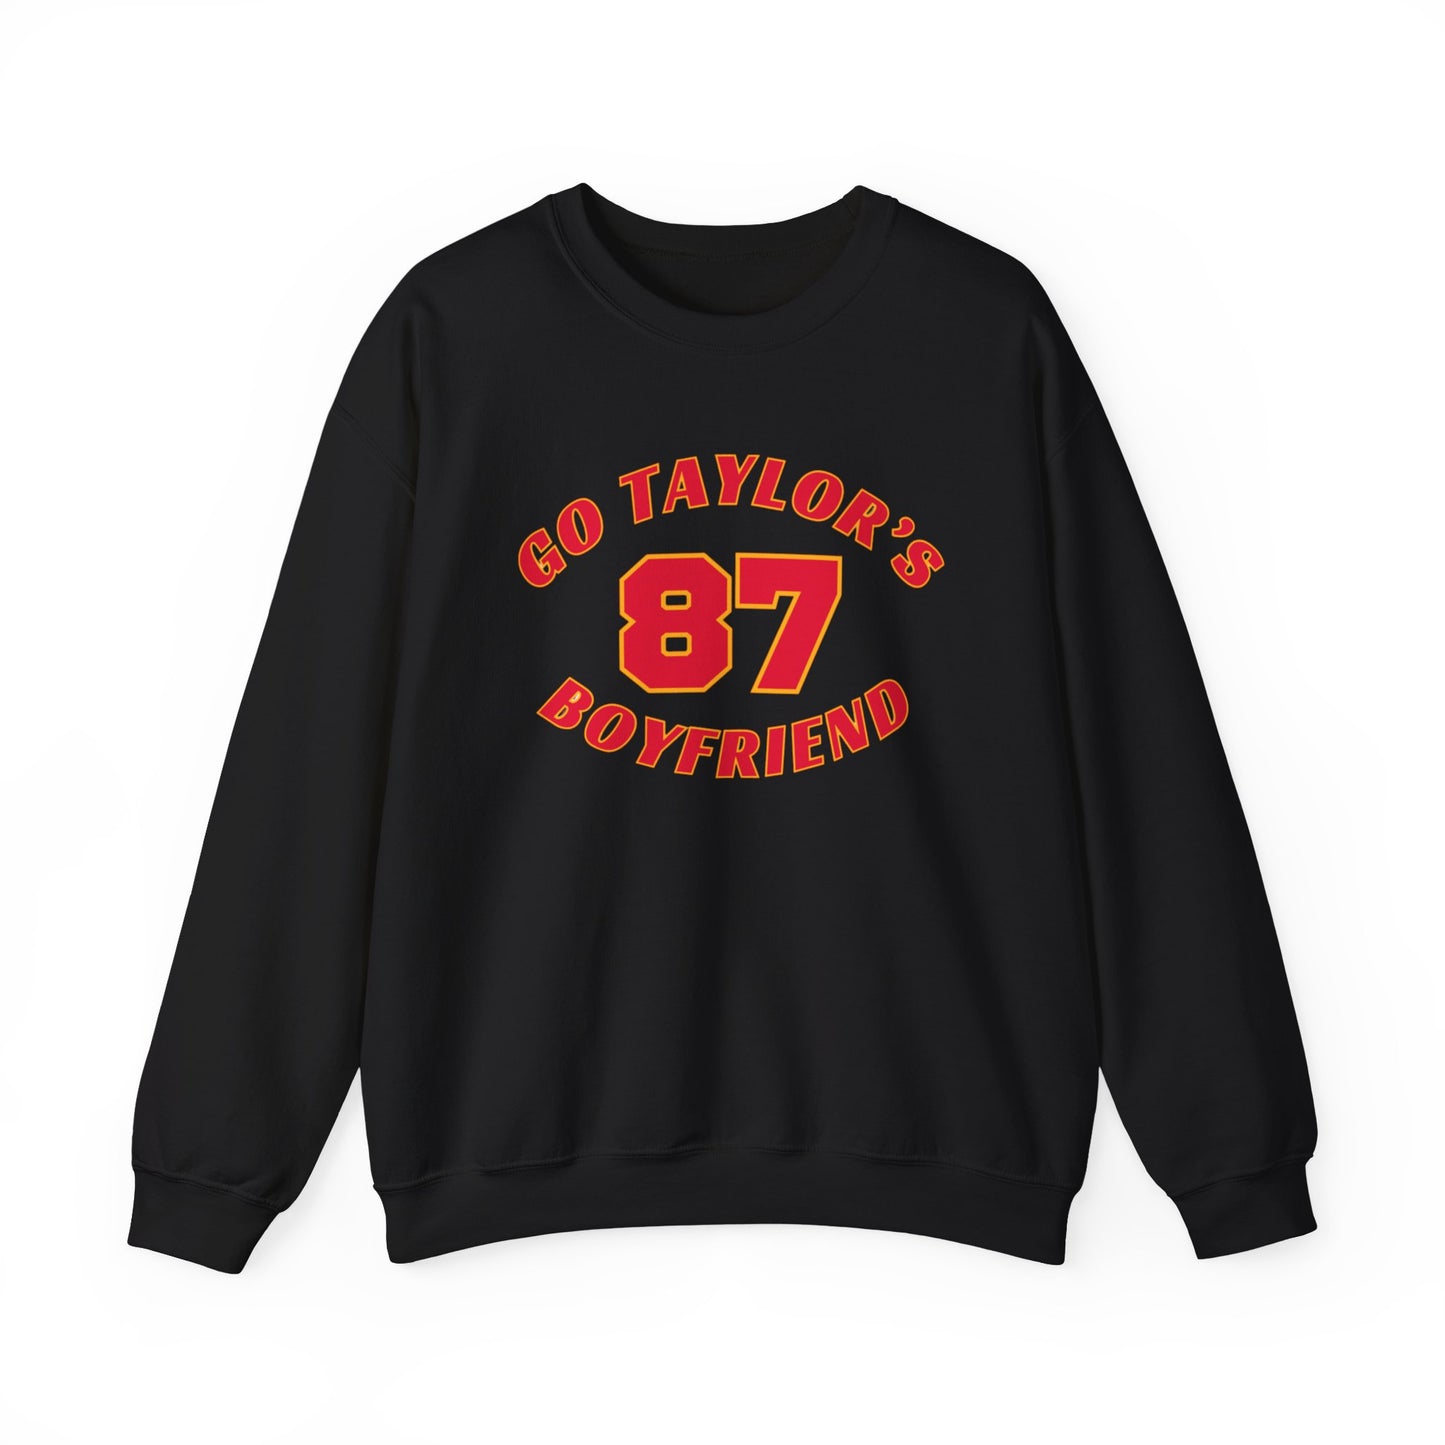 Go Taylors Boyfriend! Unisex Heavy Blend Crewneck Sweatshirt for Ultimate Comfort and Style